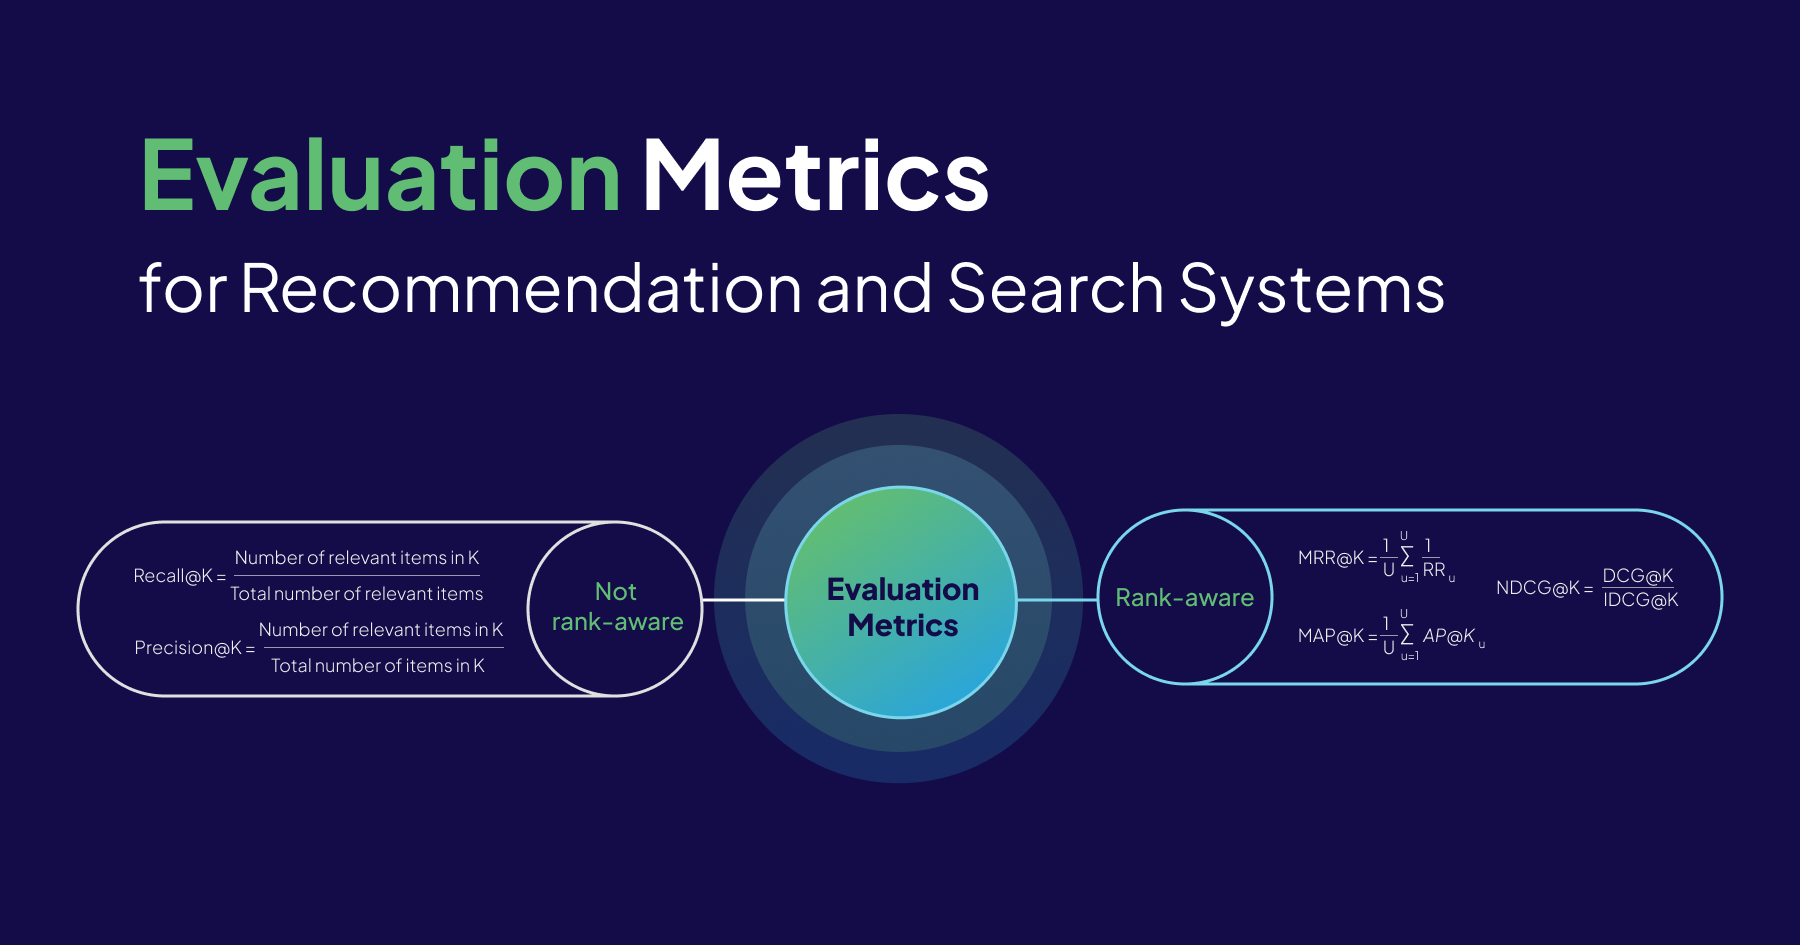 Evaluating metrics for information retrieval systems